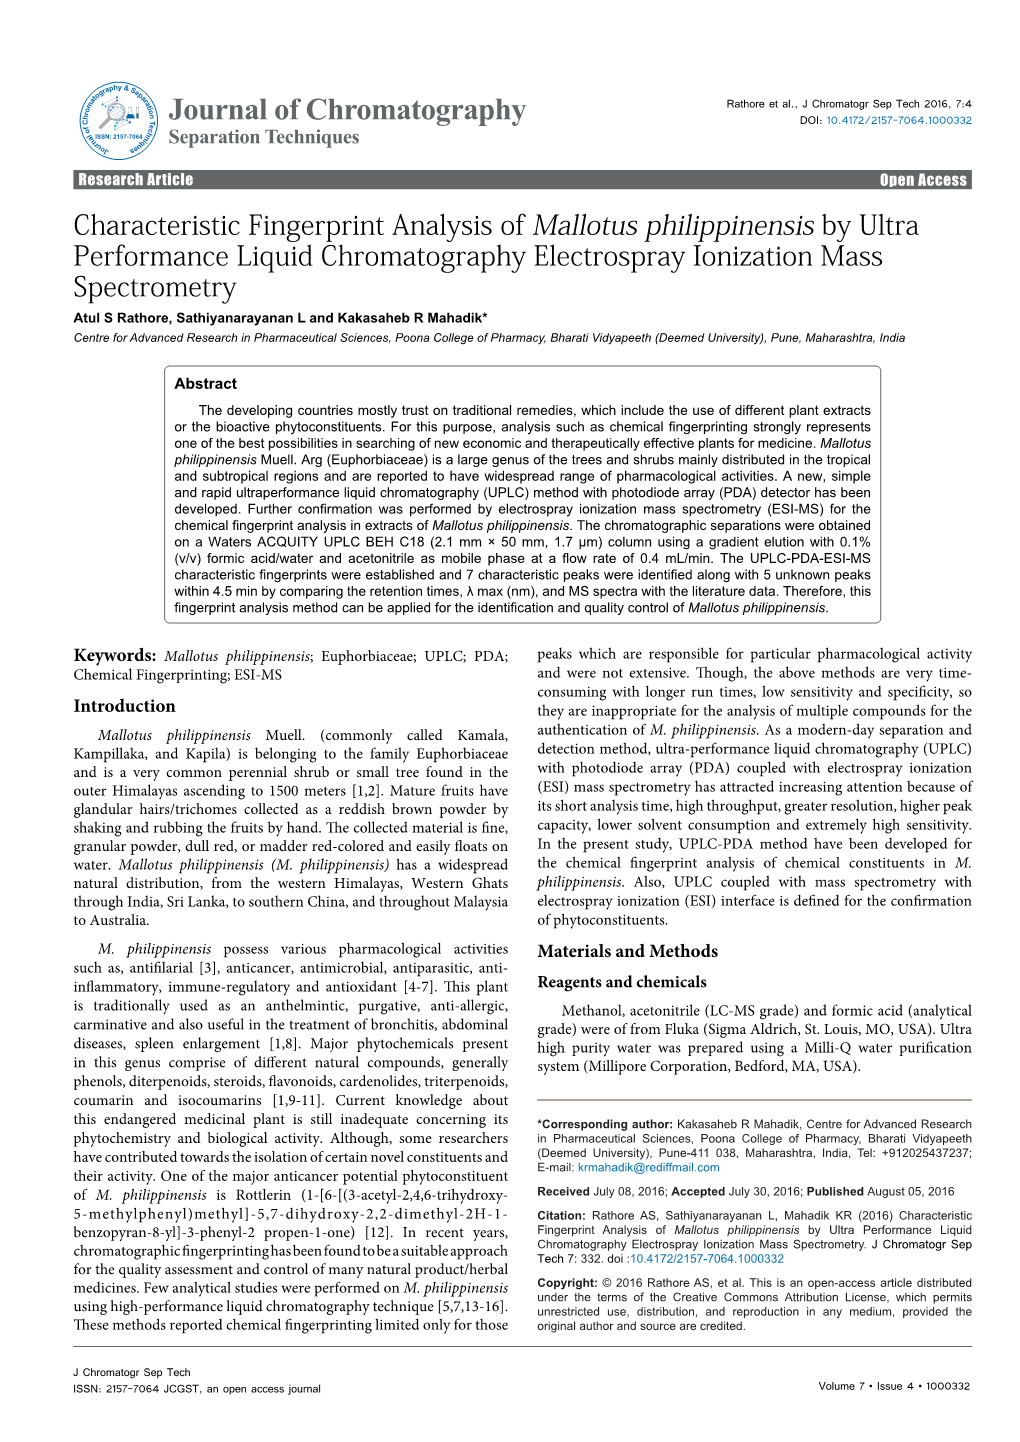 Characteristic Fingerprint Analysis of Mallotus Philippinensis by Ultra